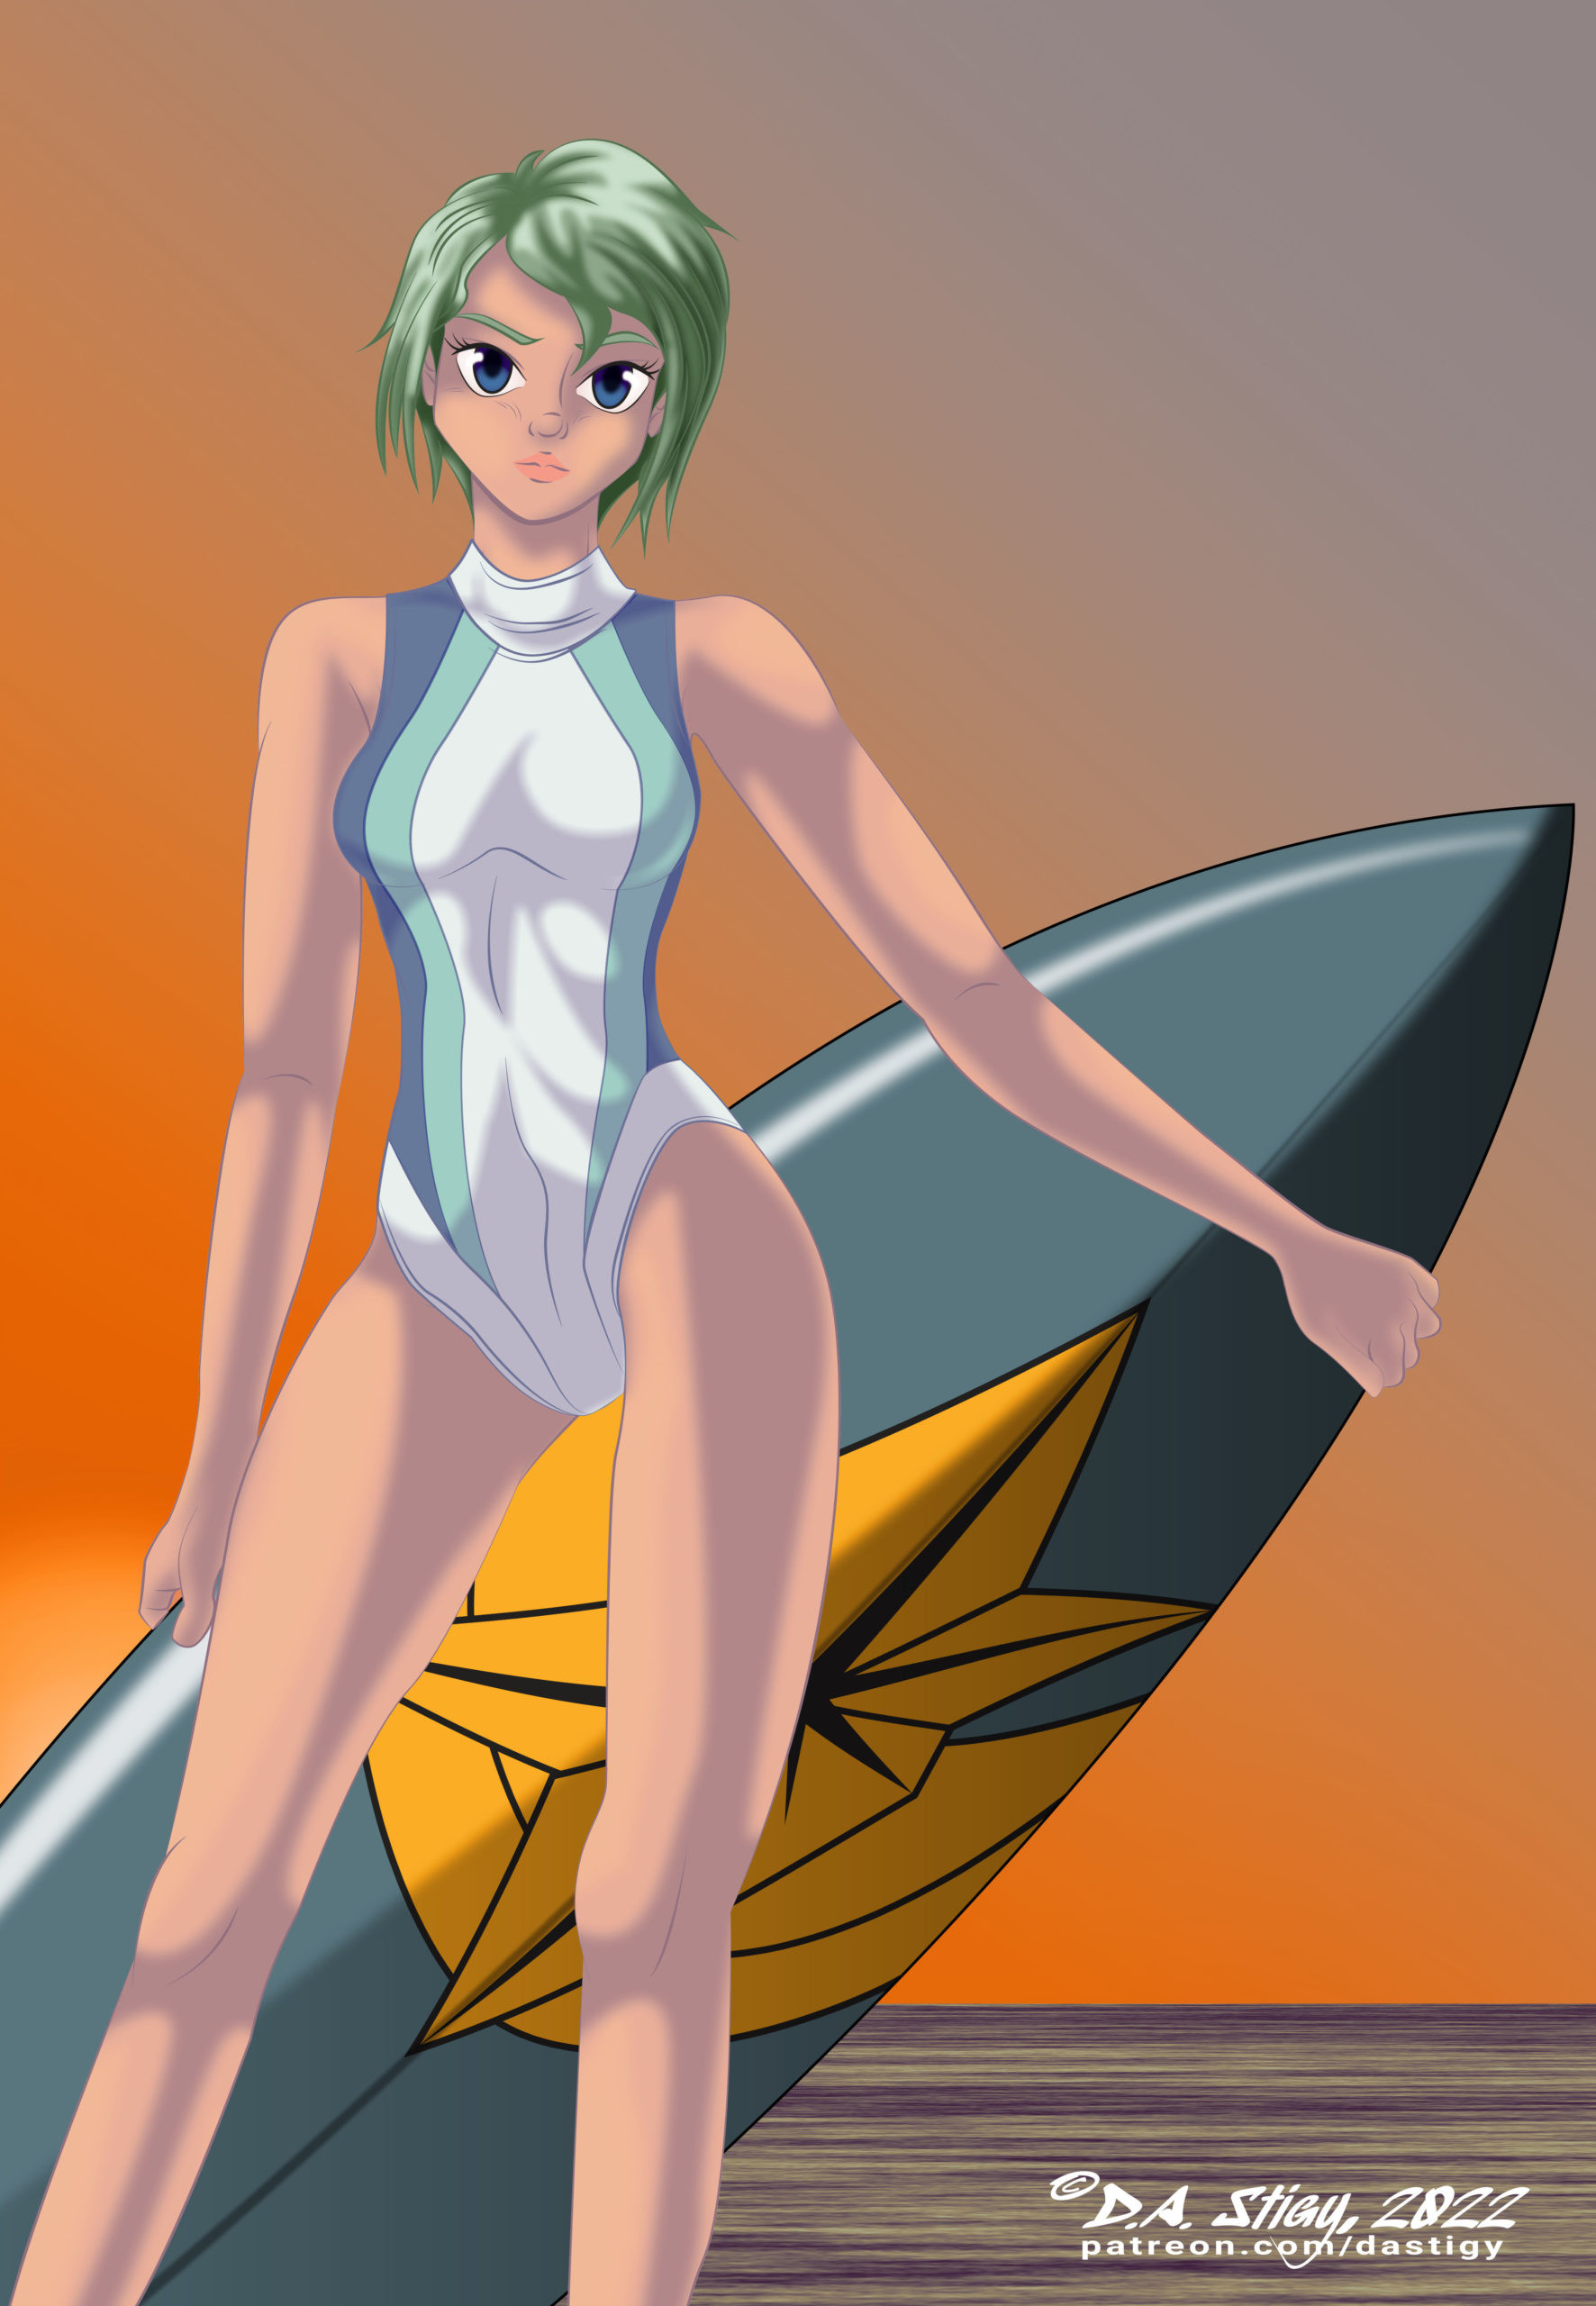 Jade, holding a surfboard at sunrise